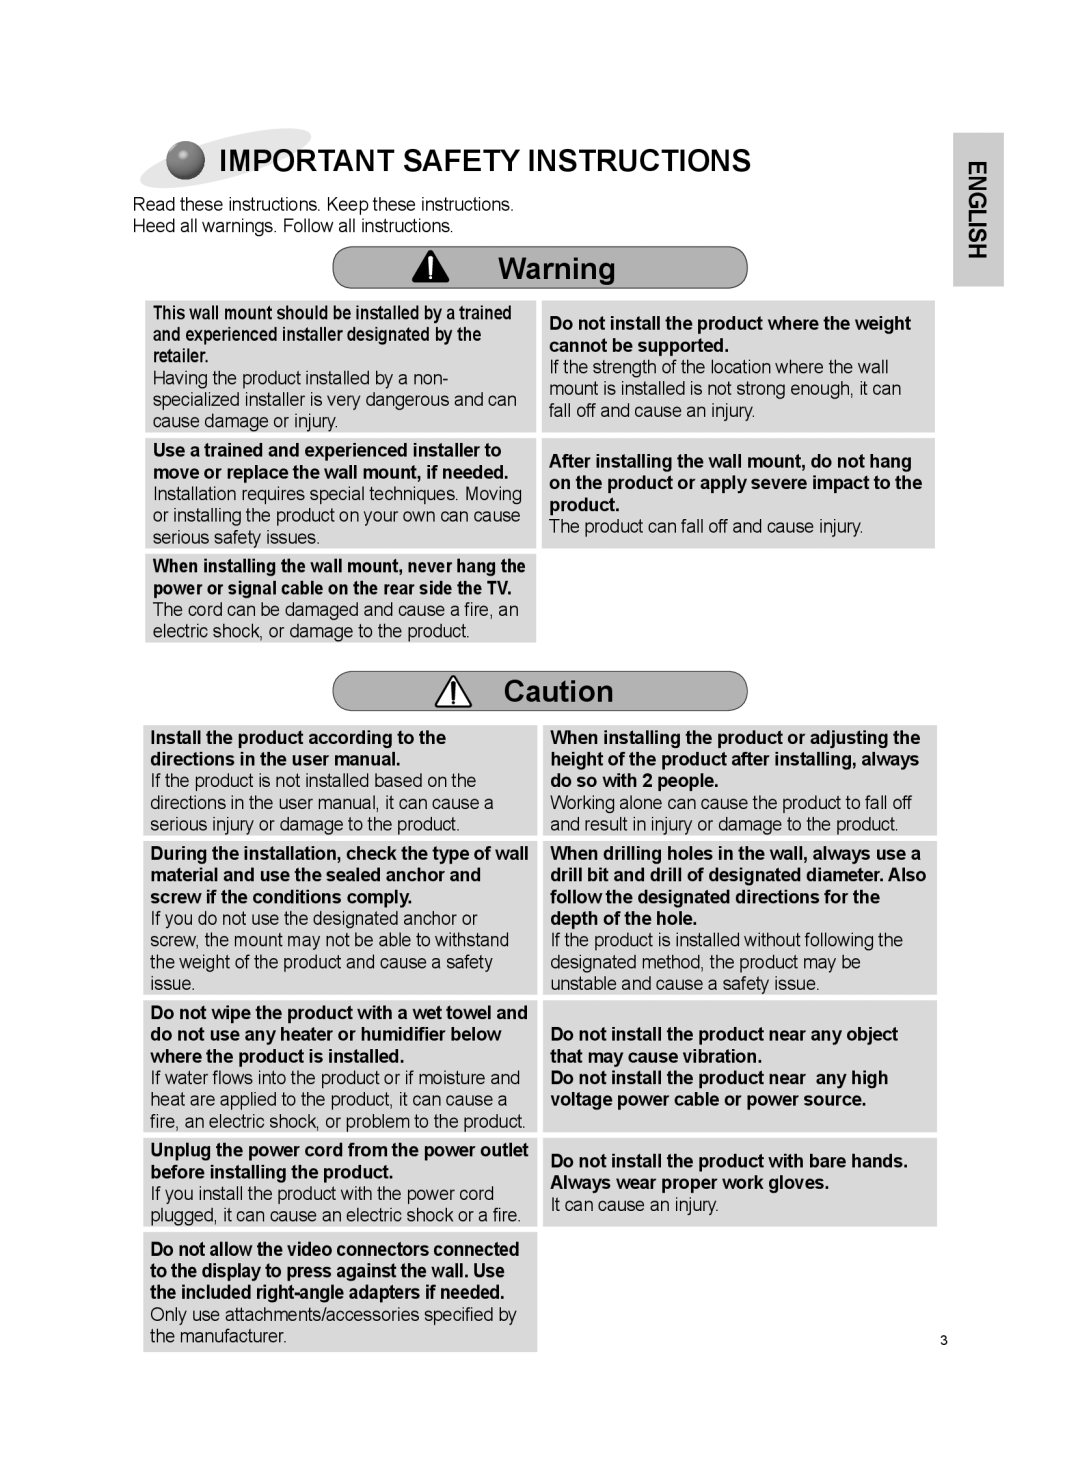 LG Electronics OSW100 install manual Important Safety Instructions, English 